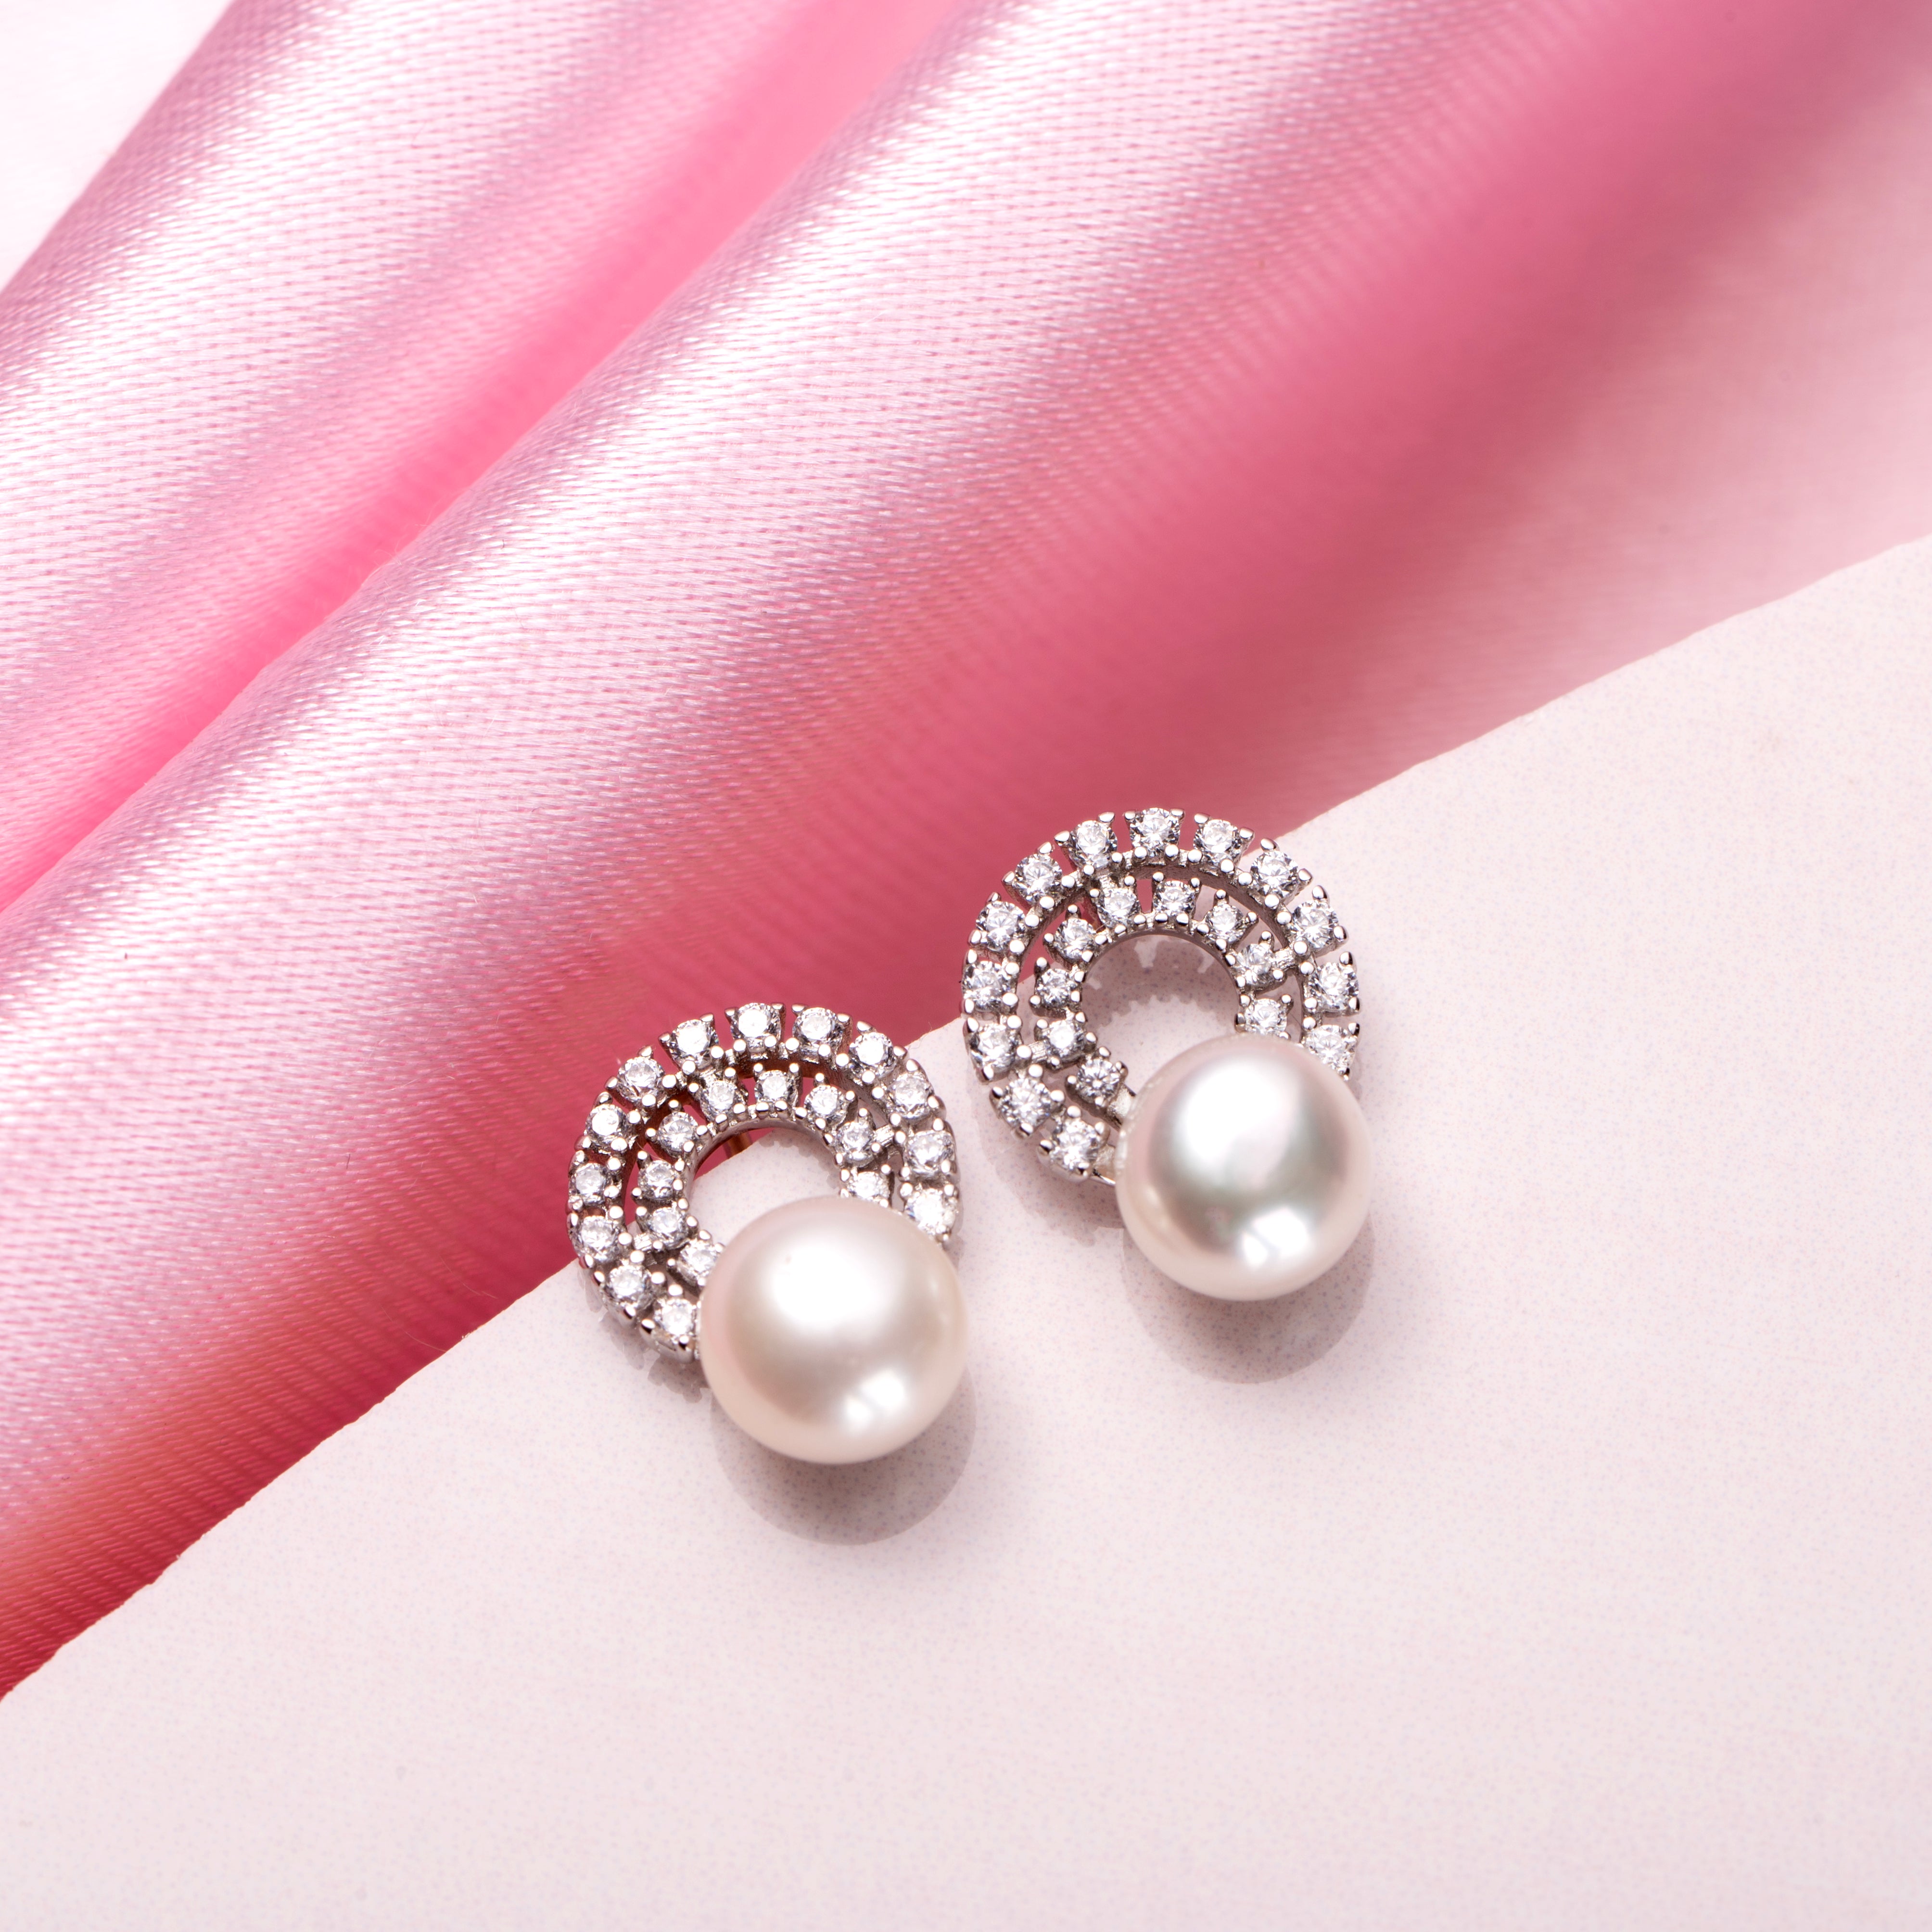 Celestial Pearl Elegance Rhodium-Plated 925 Sterling Silver Circle Earrings